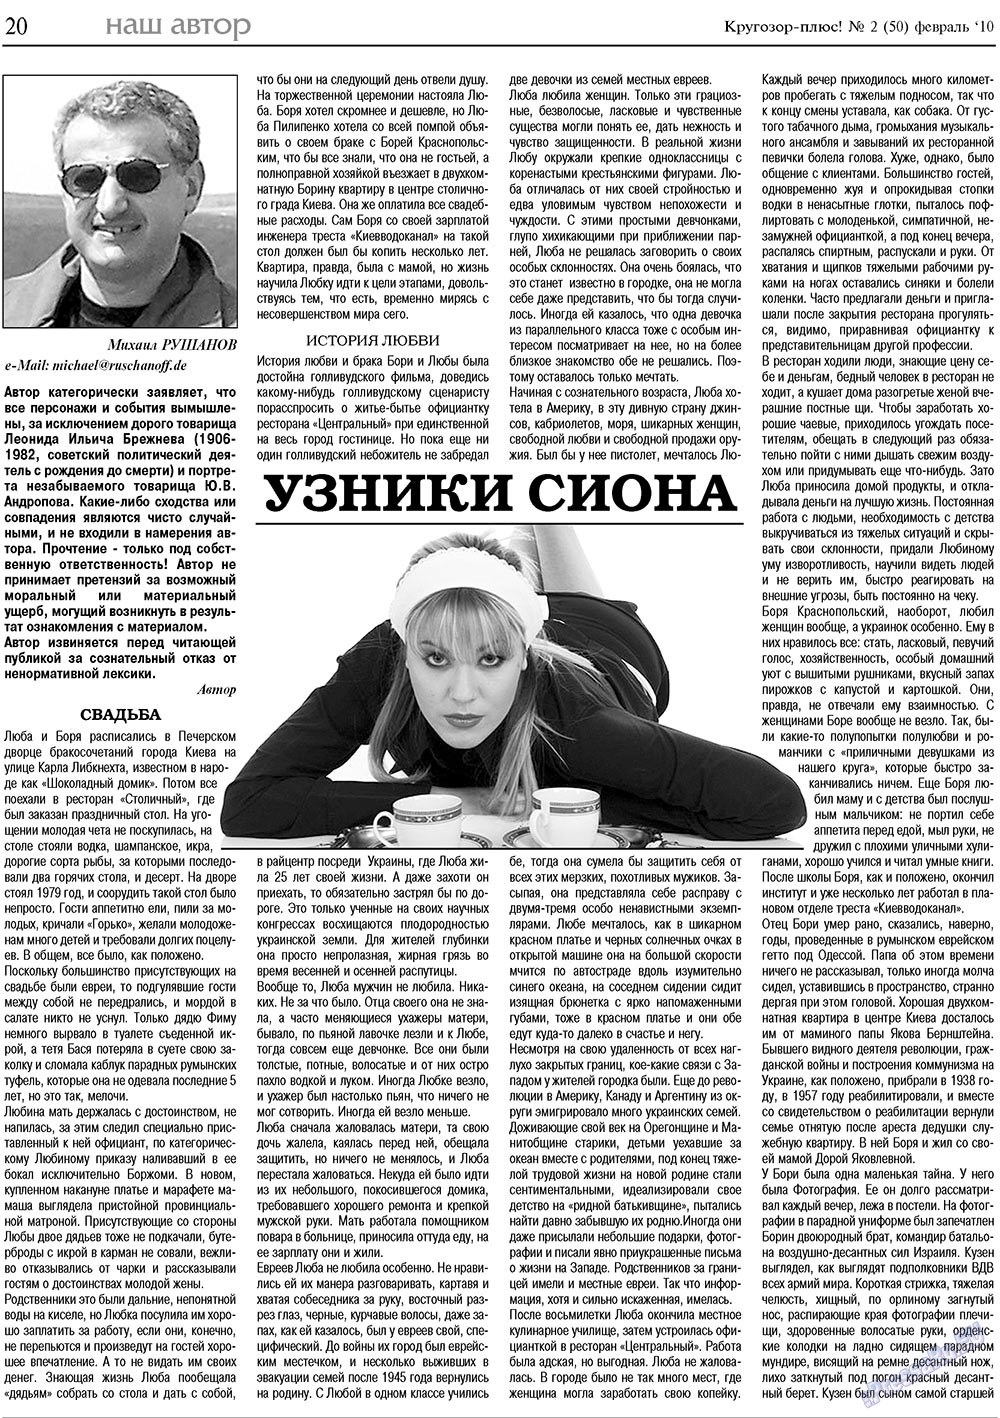 Кругозор плюс! (газета). 2010 год, номер 2, стр. 20